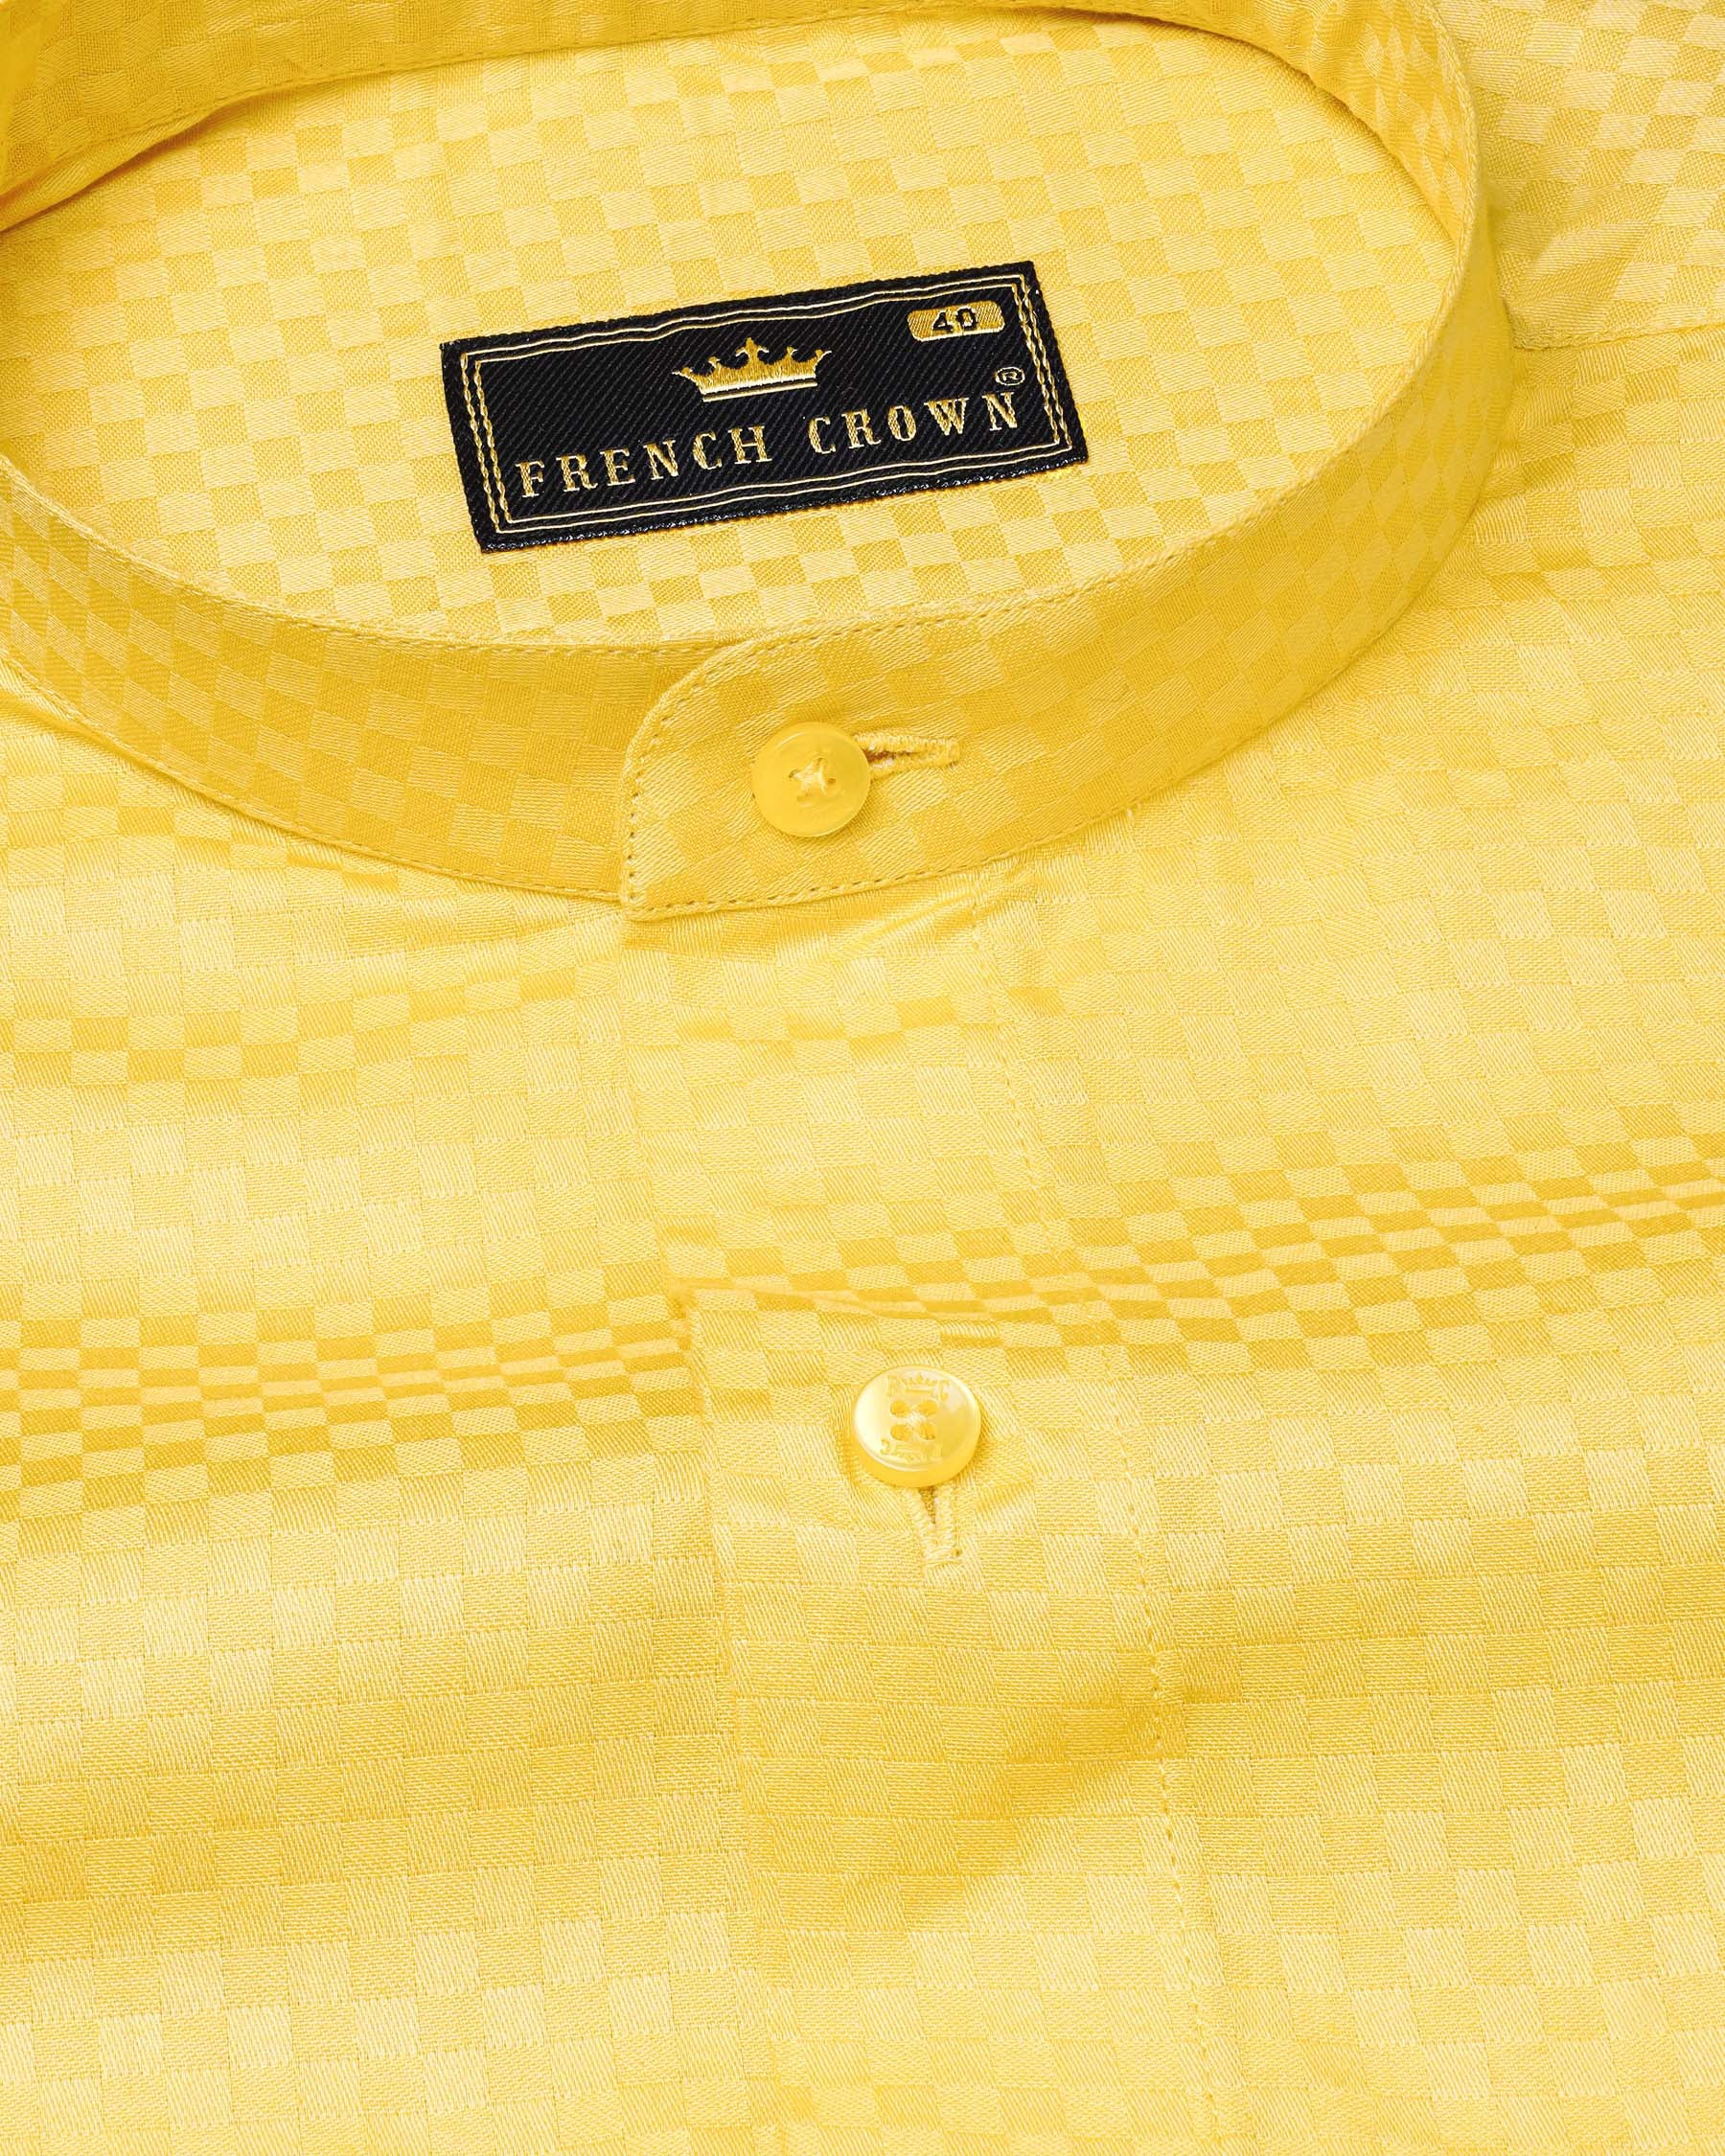 Arylide Yellow Checked Dobby Textured Premium Giza Cotton Shirt 7735-M-YL-38, 7735-M-YL-H-38, 7735-M-YL-39,7735-M-YL-H-39, 7735-M-YL-40, 7735-M-YL-H-40, 7735-M-YL-42, 7735-M-YL-H-42, 7735-M-YL-44, 7735-M-YL-H-44, 7735-M-YL-46, 7735-M-YL-H-46, 7735-M-YL-48, 7735-M-YL-H-48, 7735-M-YL-50, 7735-M-YL-H-50, 7735-M-YL-52, 7735-M-YL-H-52